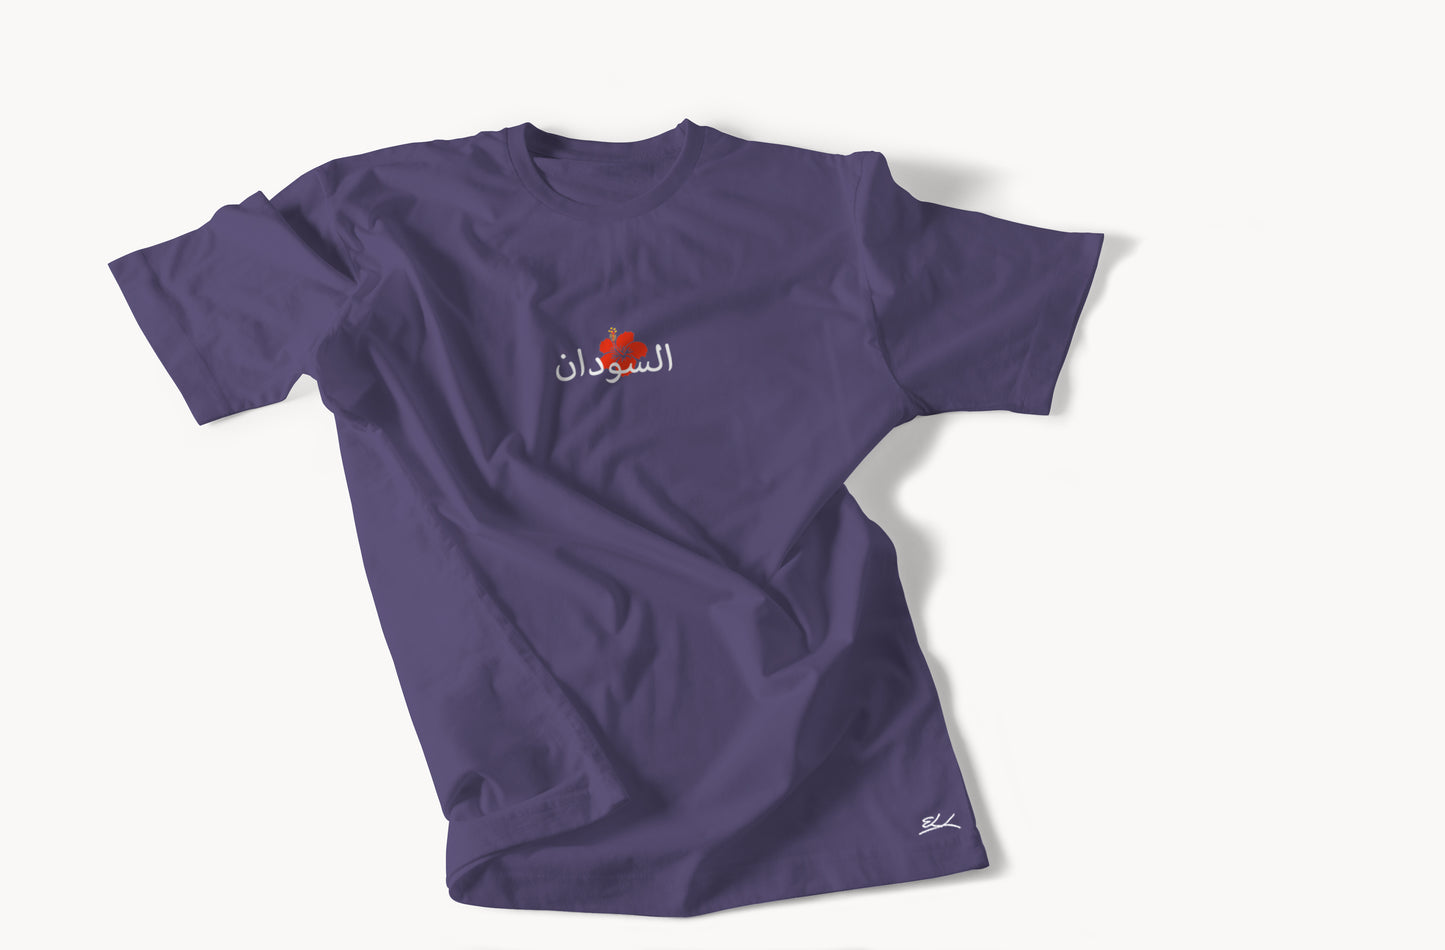 Hibiscus “Kerkede” T-shirt - Elrayah